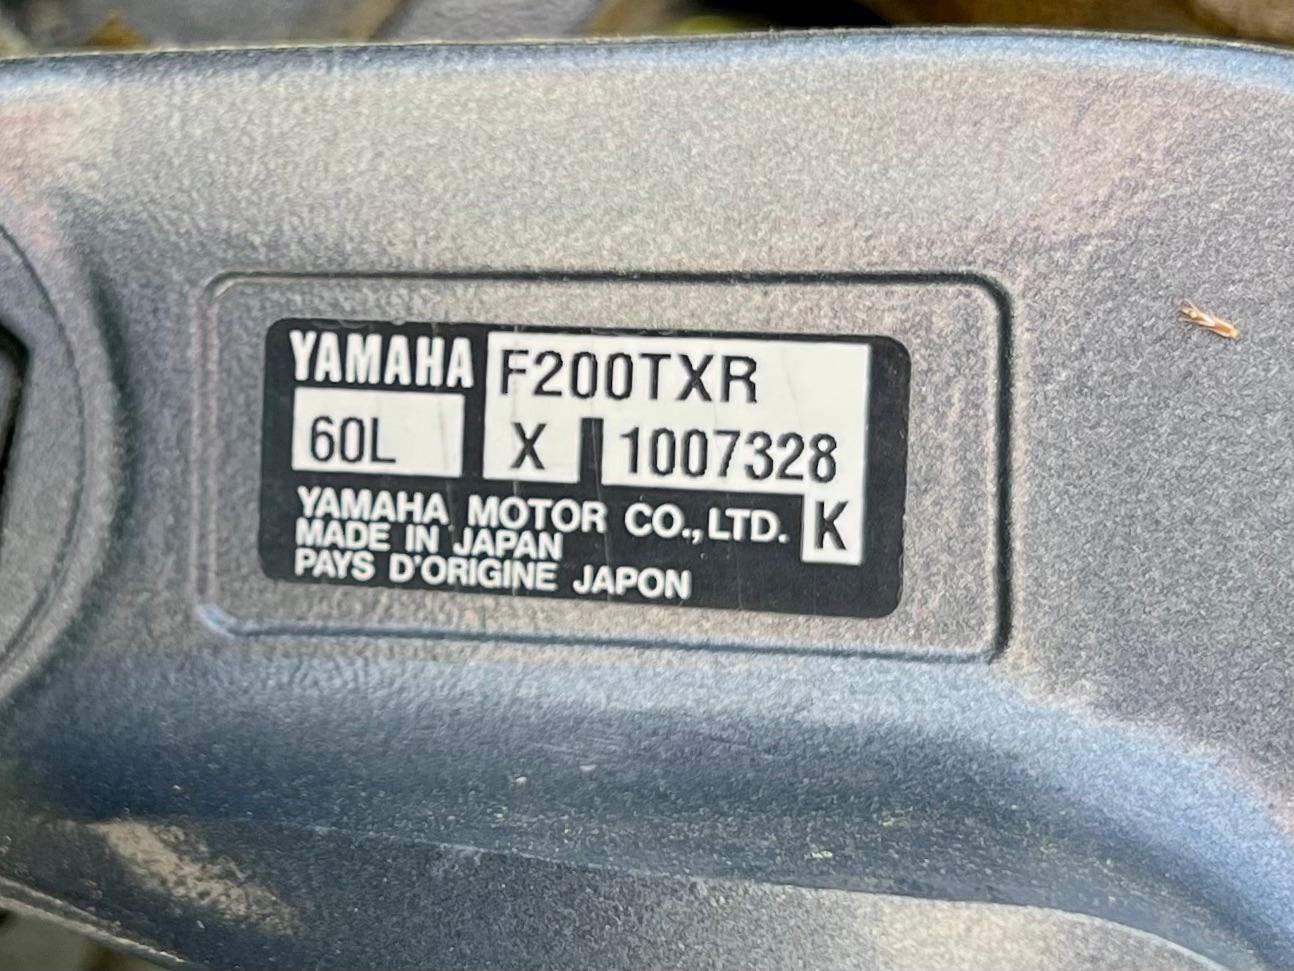 Yamaha engine plate